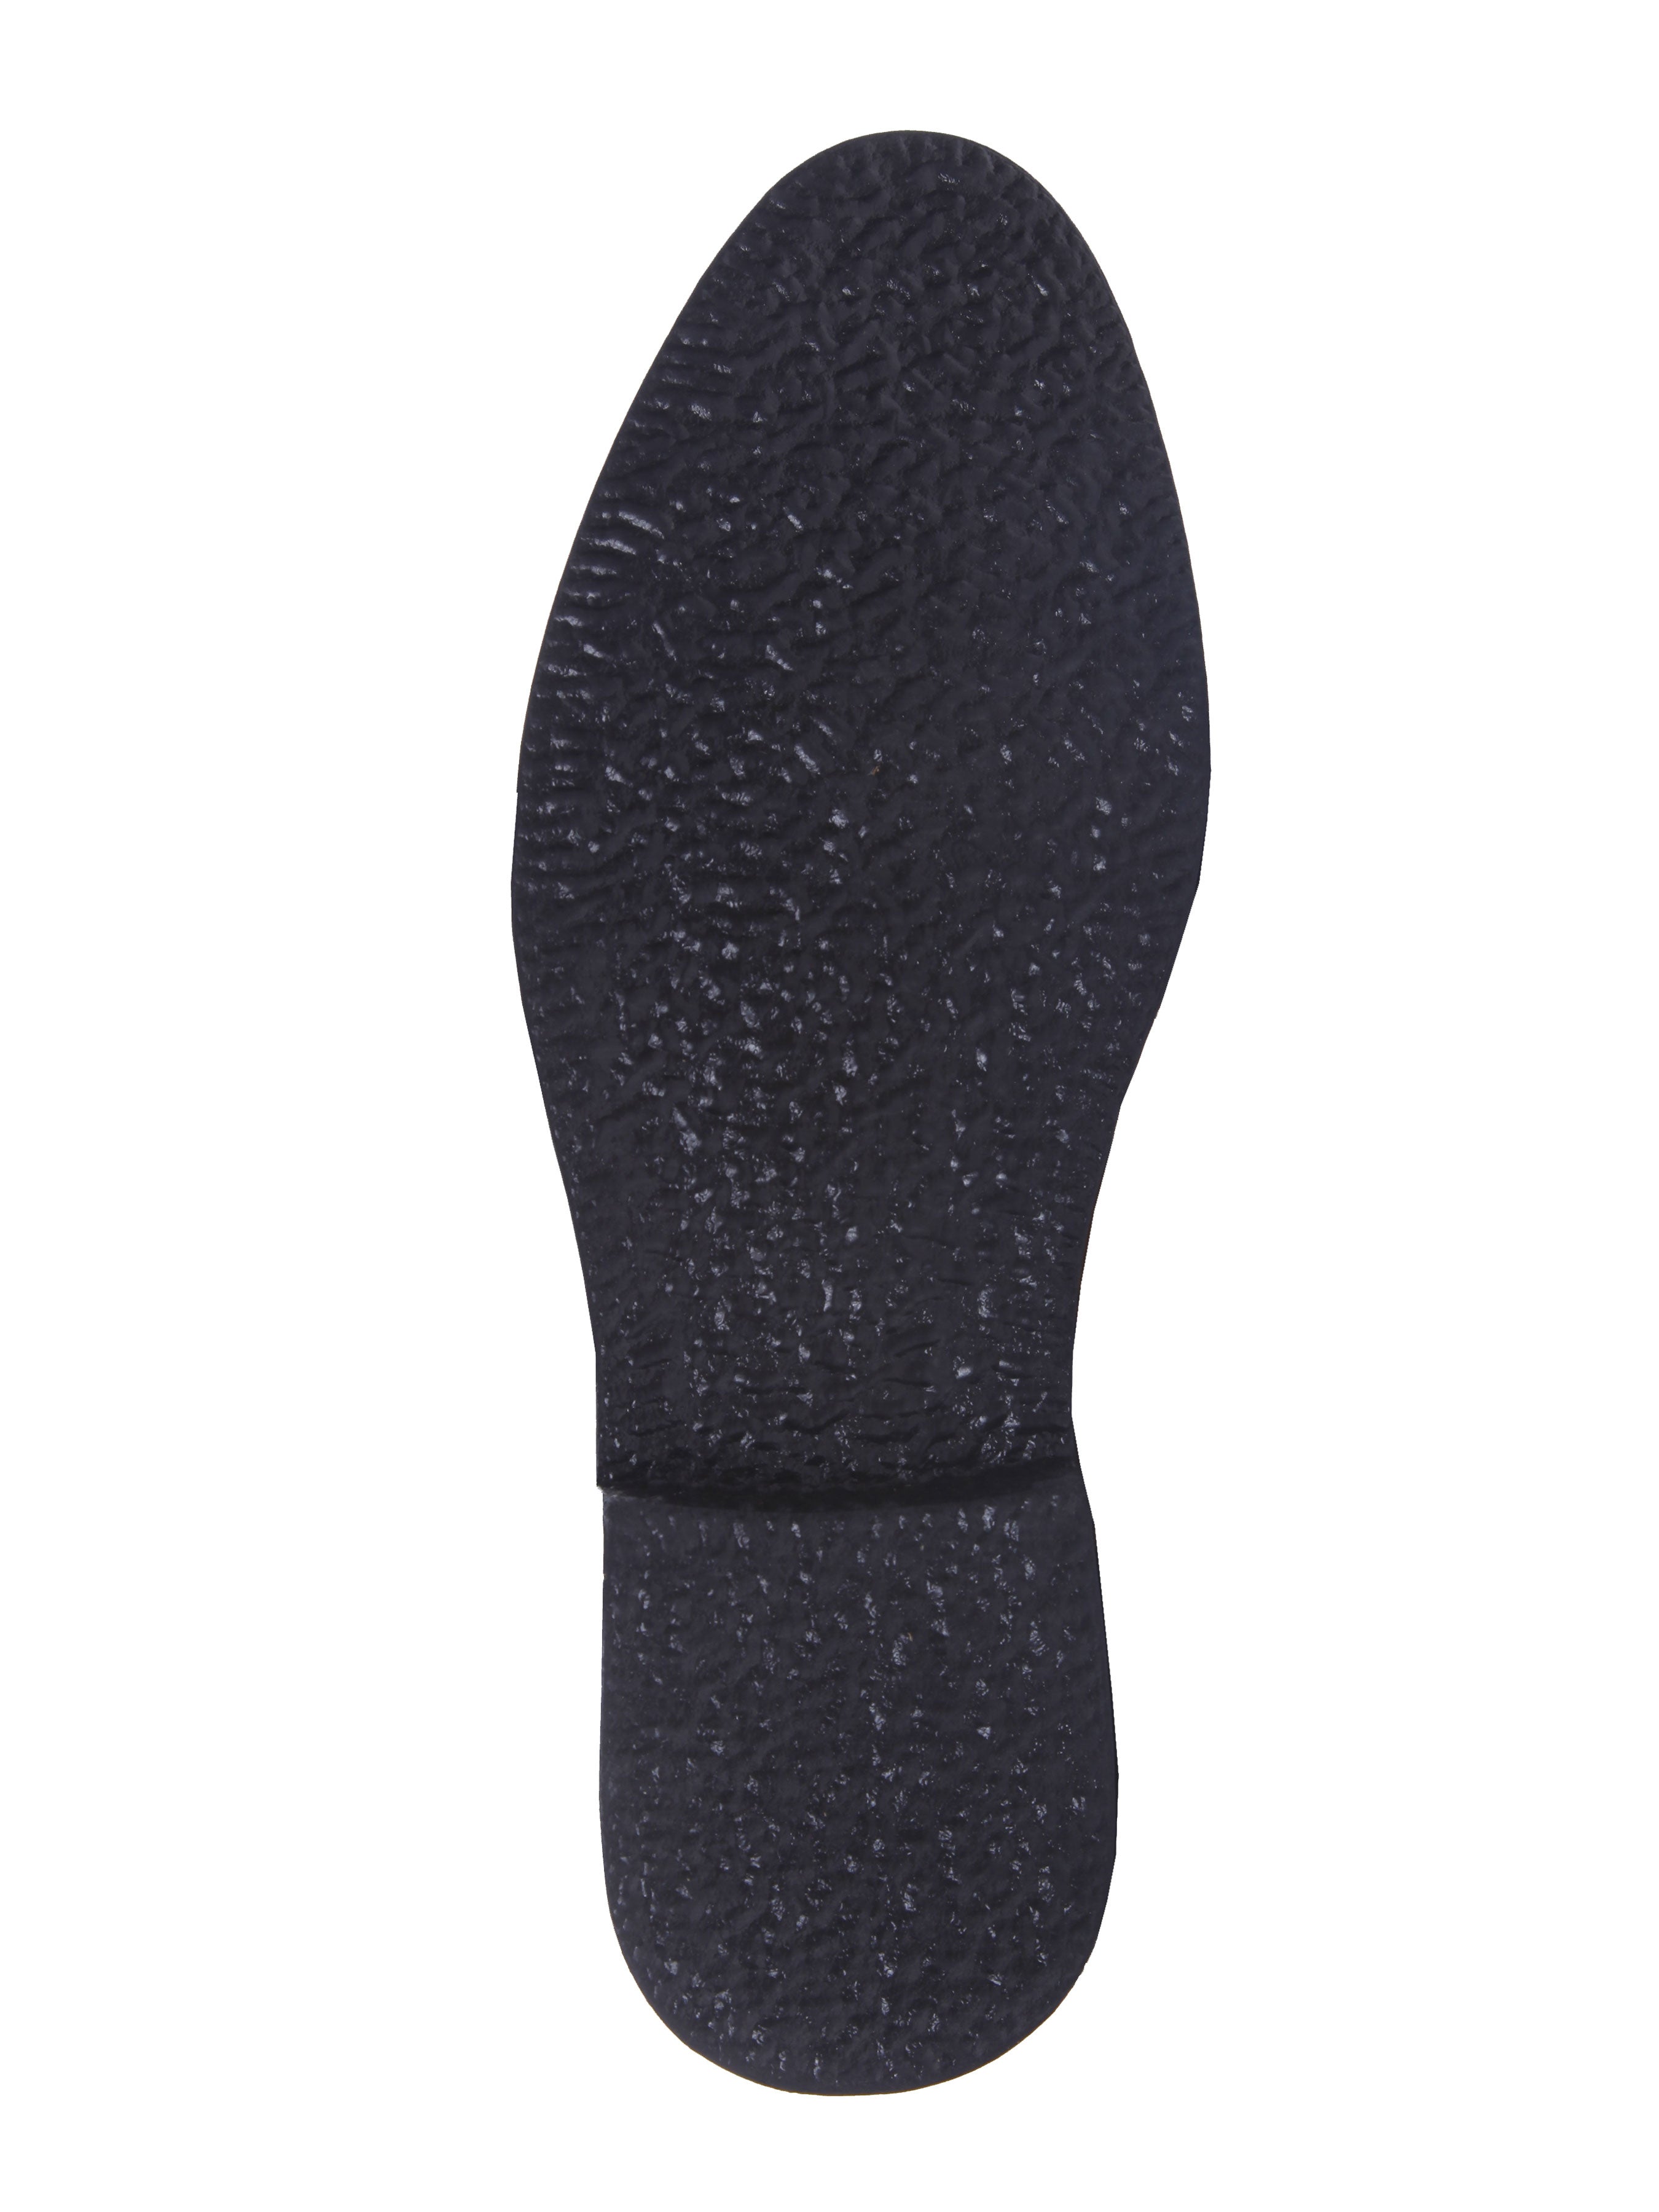 Penny Loafer Horsebit Buckle - Black Croco Leather (Crepe Sole) - Zeve Shoes